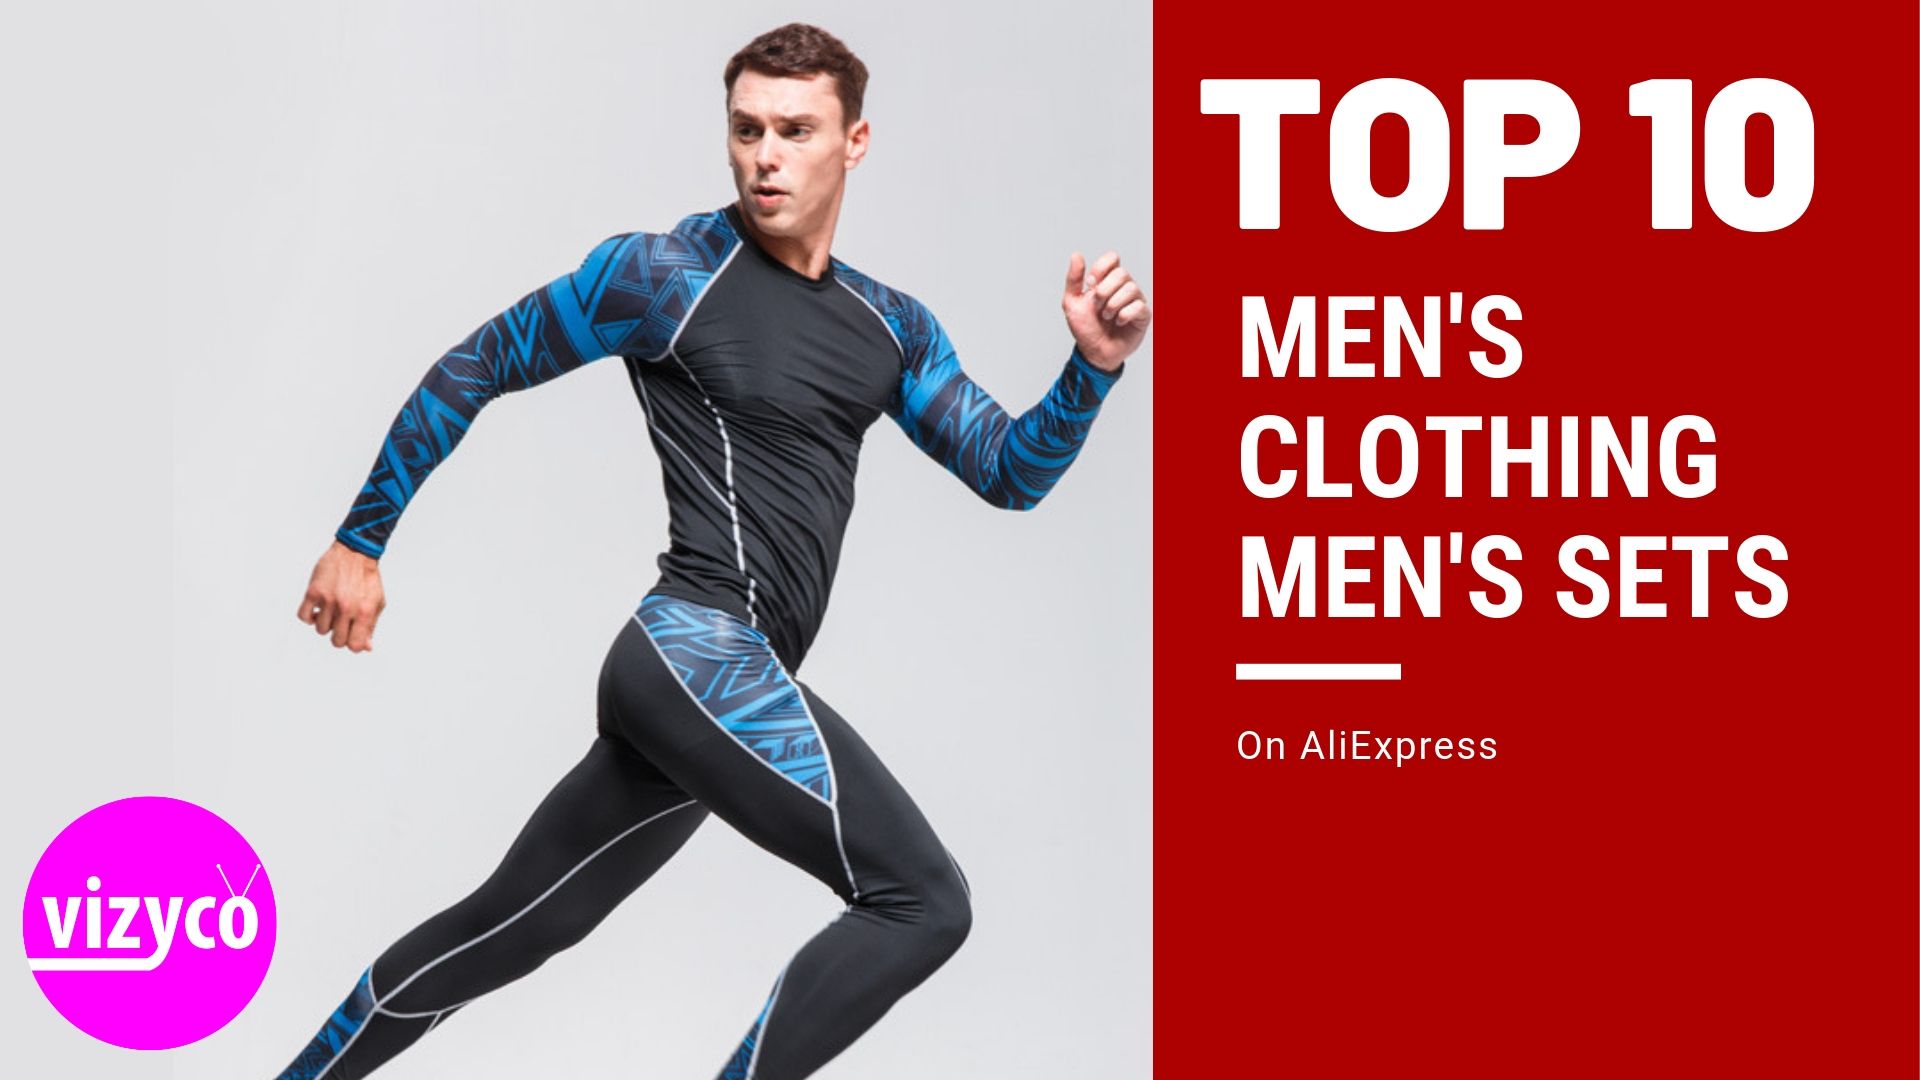 Men's Sets AliExpress Top 10 on Men's Clothing - vizyco